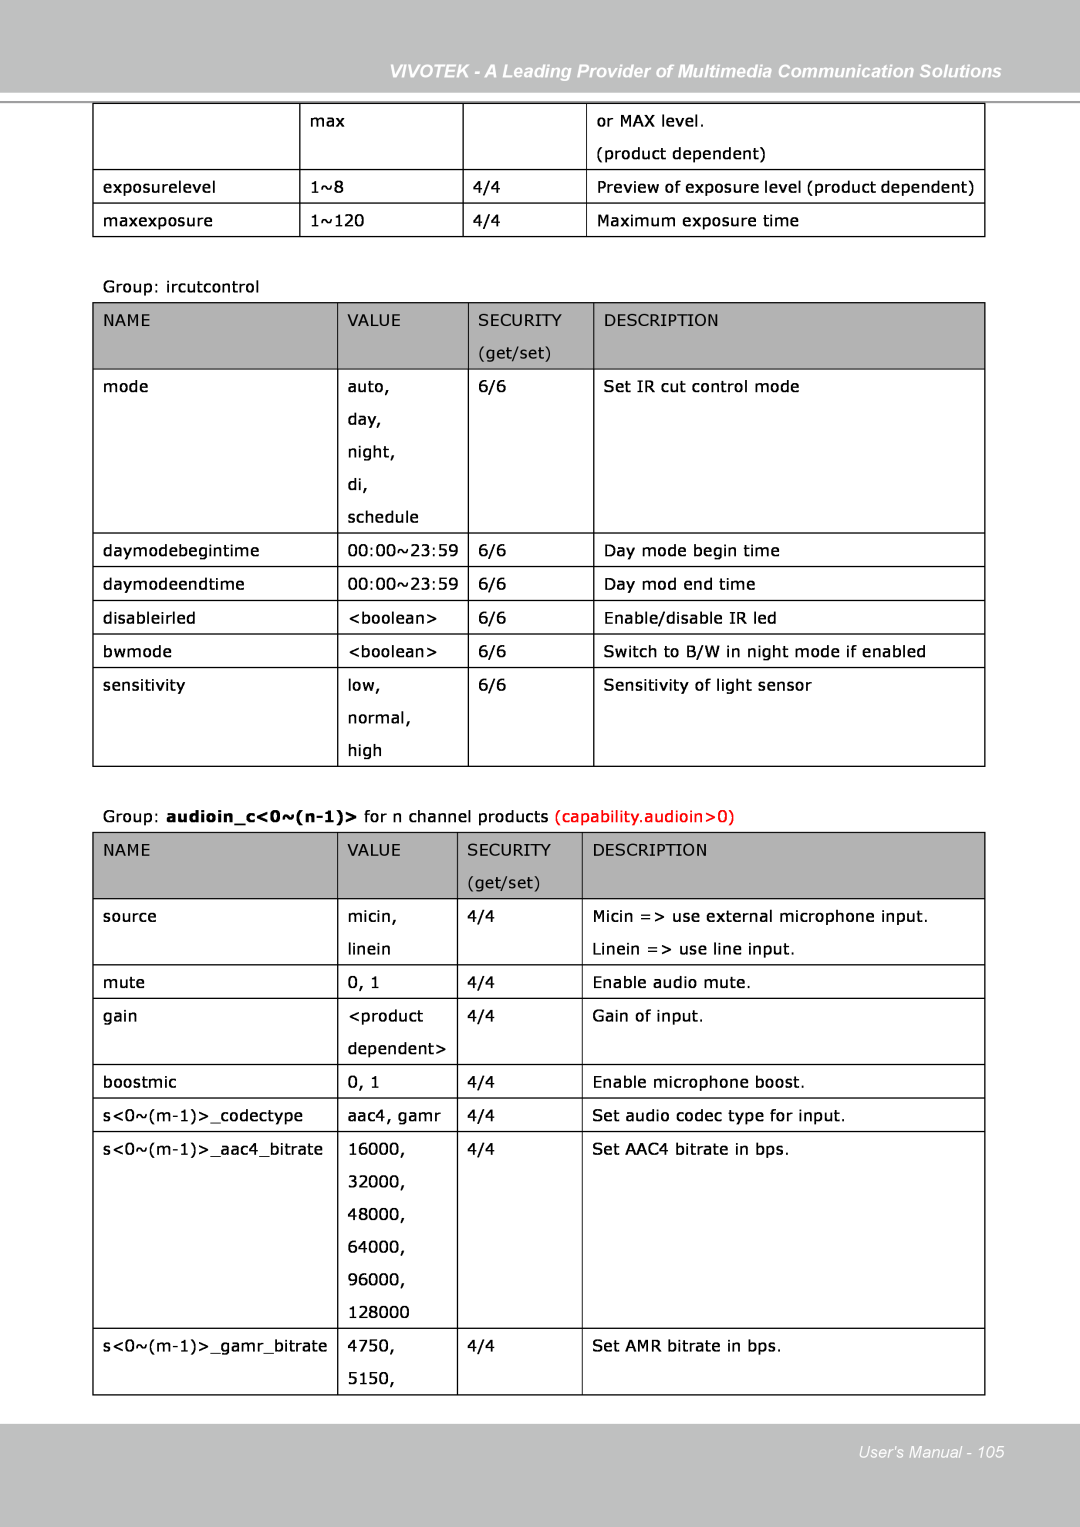 Vivotek FD7141(V) manual or MAX level, Users Manual 